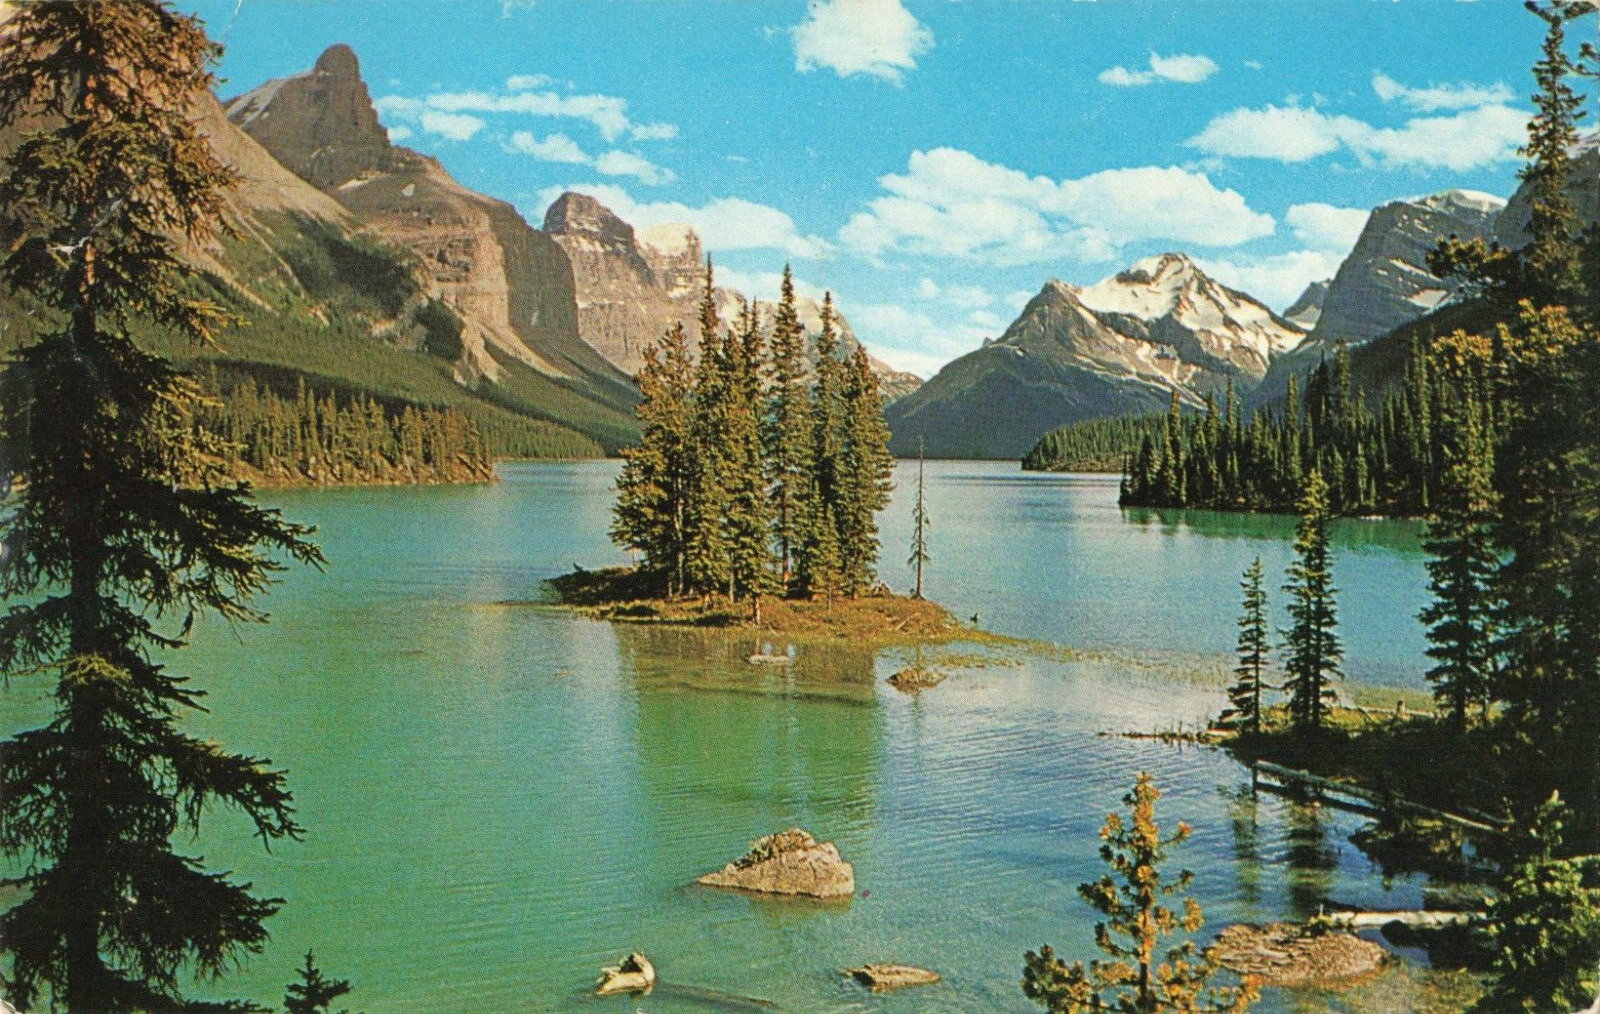 Jasper Alberta CA Canada, Maligne Lake, Jasper National Park, Vintage Postcard